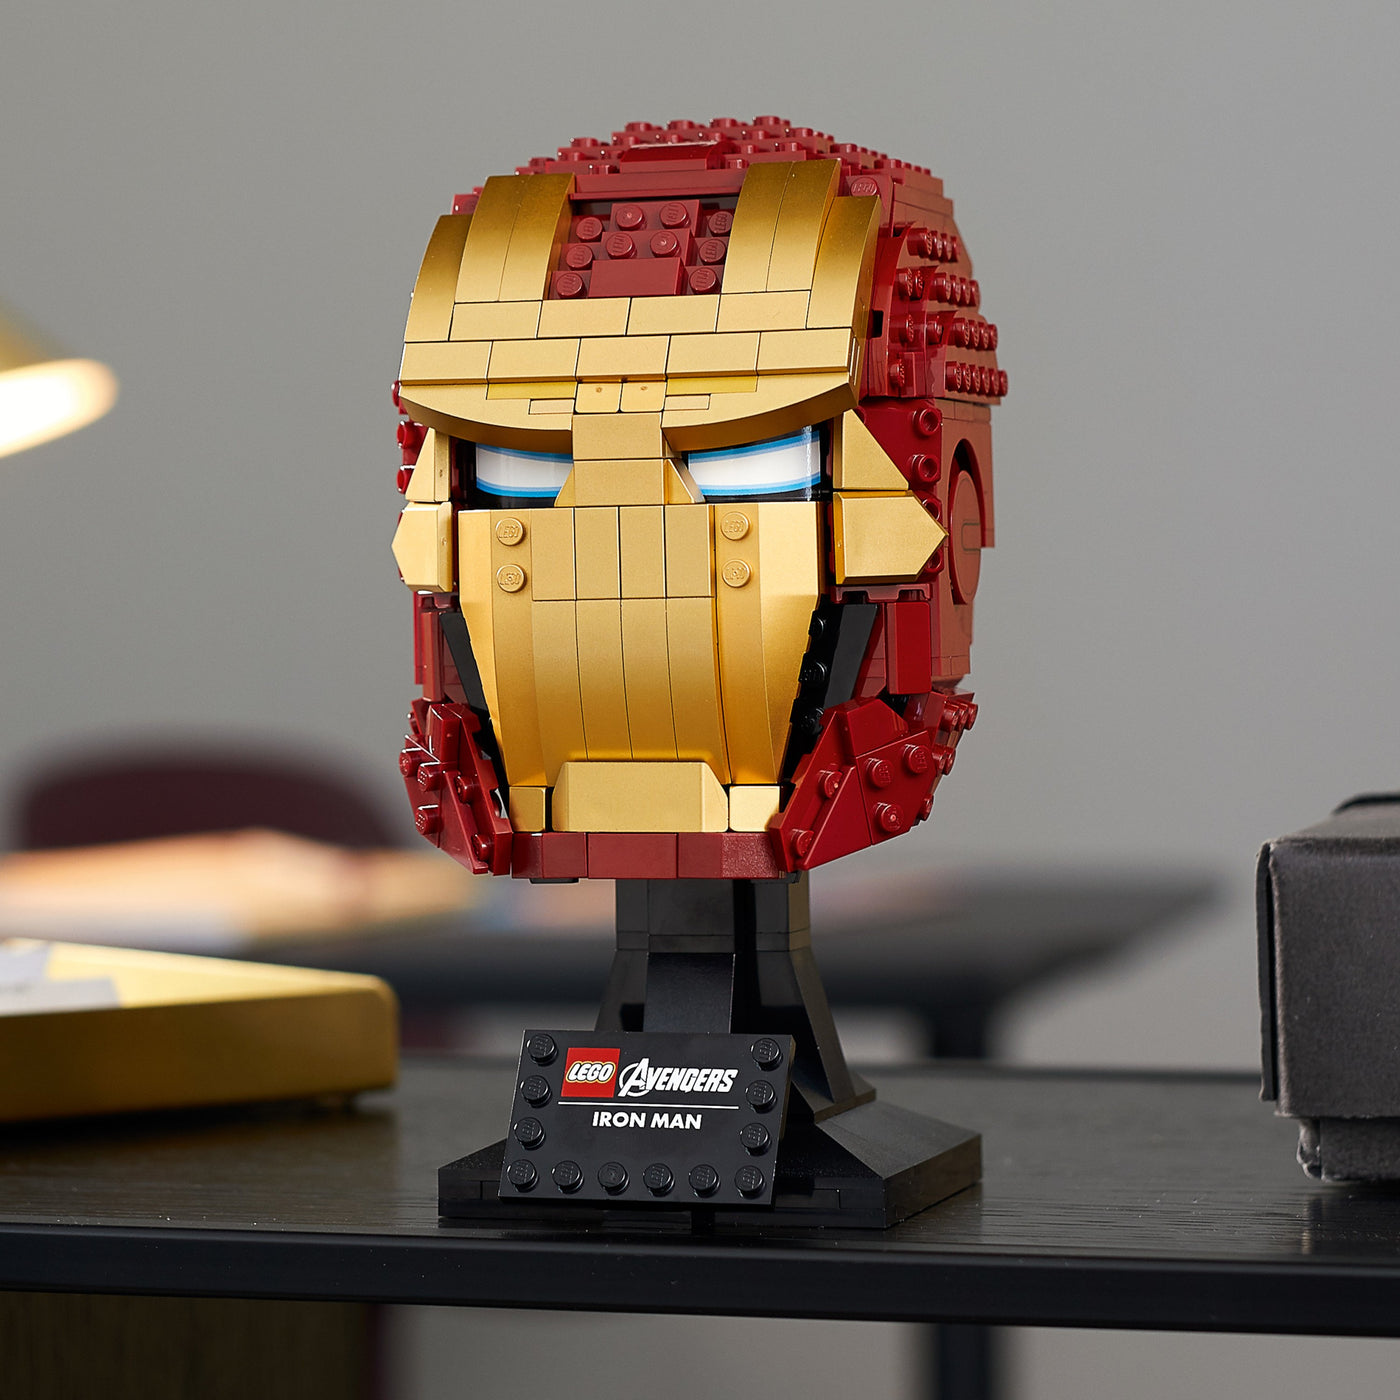 Marvel: Iron Man Helmet (76165)